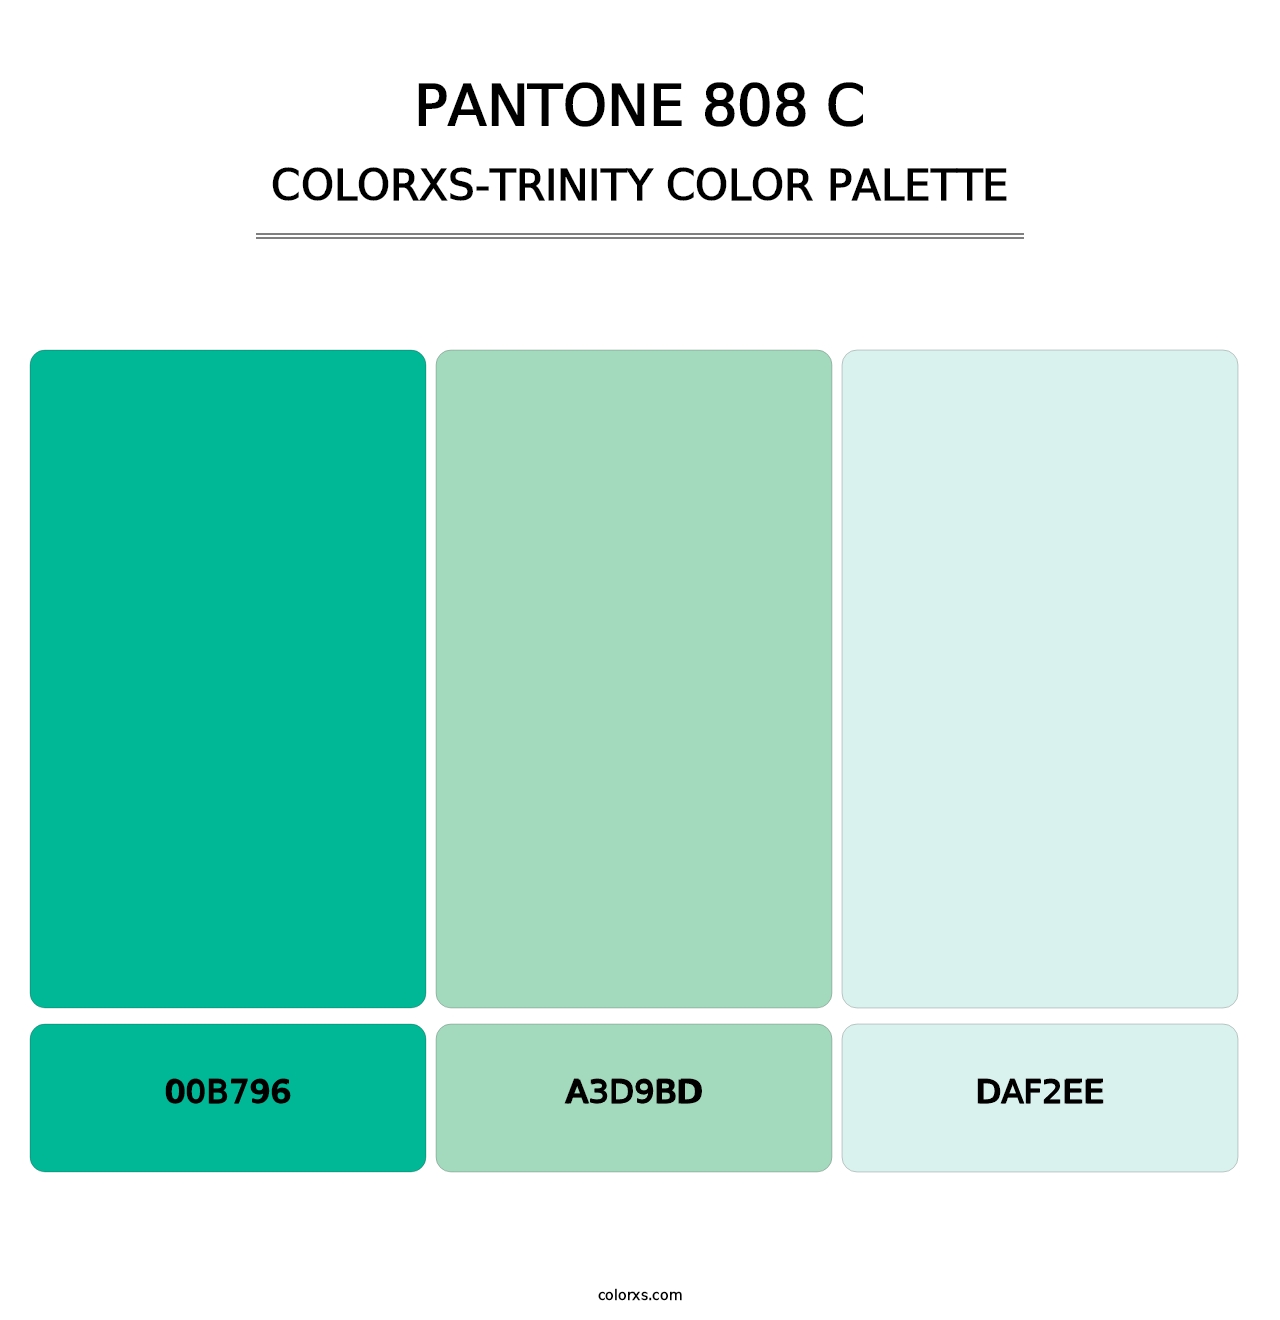 PANTONE 808 C - Colorxs Trinity Palette